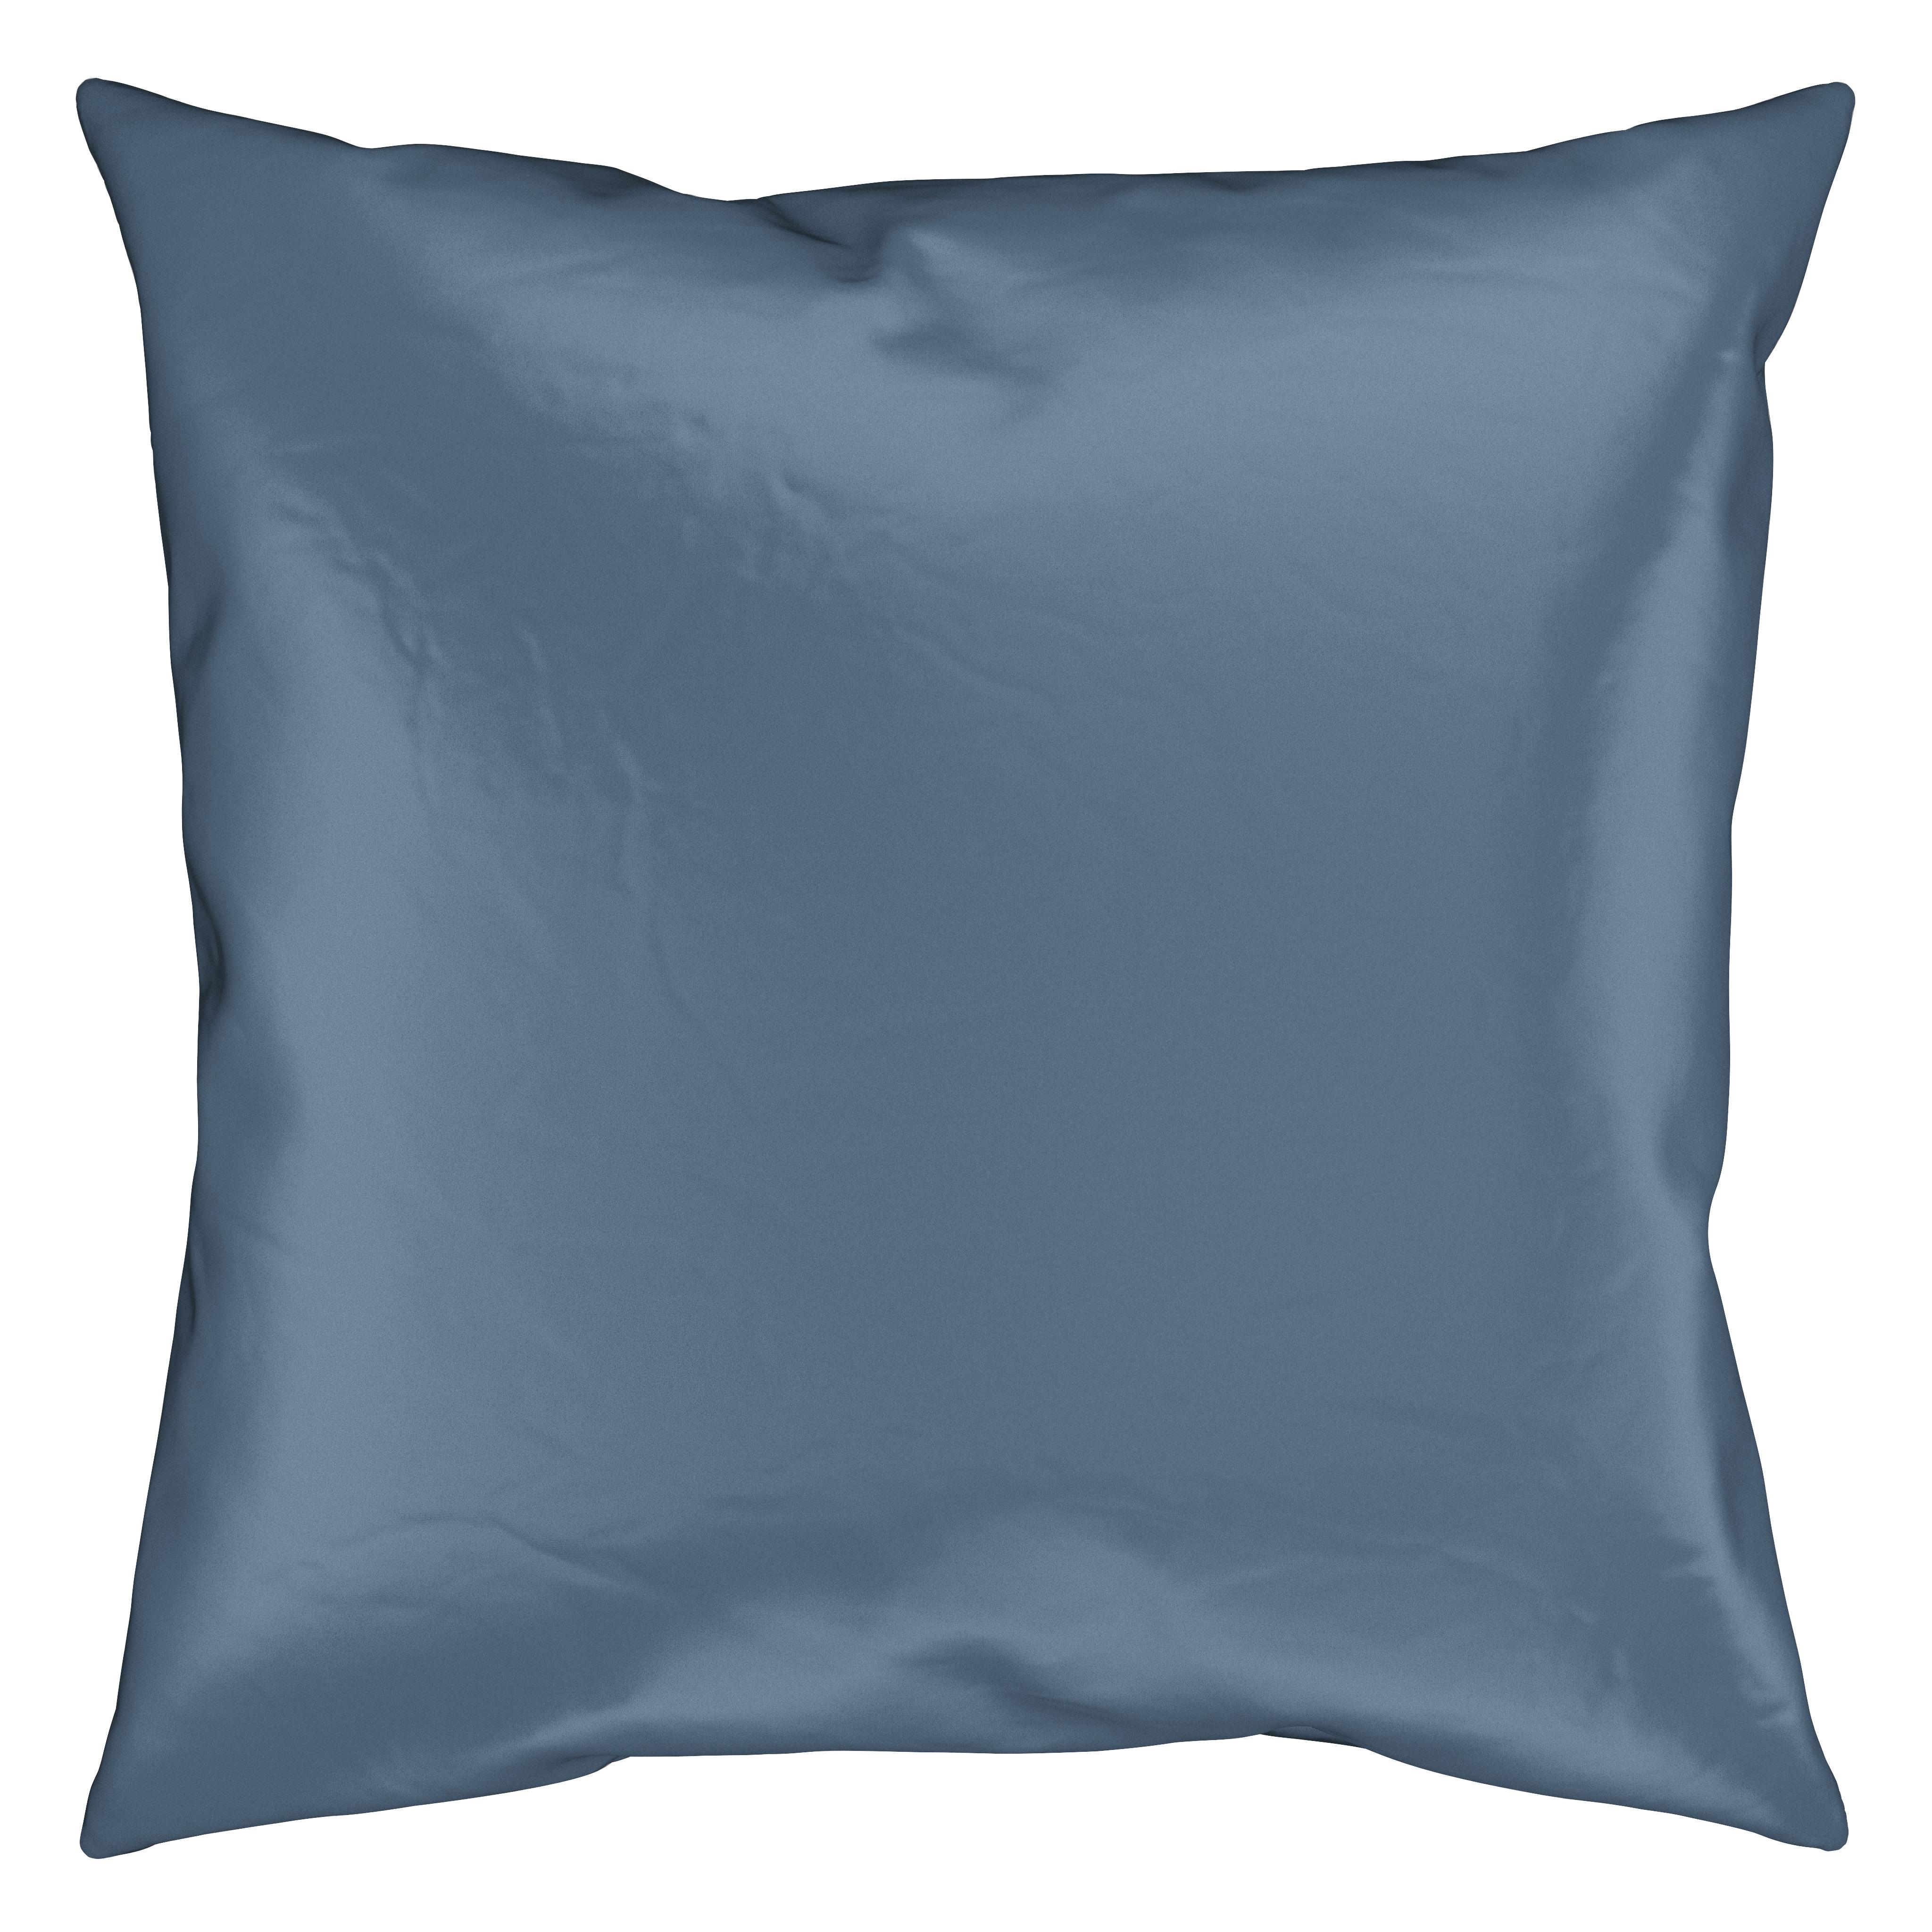 Bettwäsche Alex Uni ca. 135x200cm - Blau, MODERN, Textil (135/200cm) - Premium Living